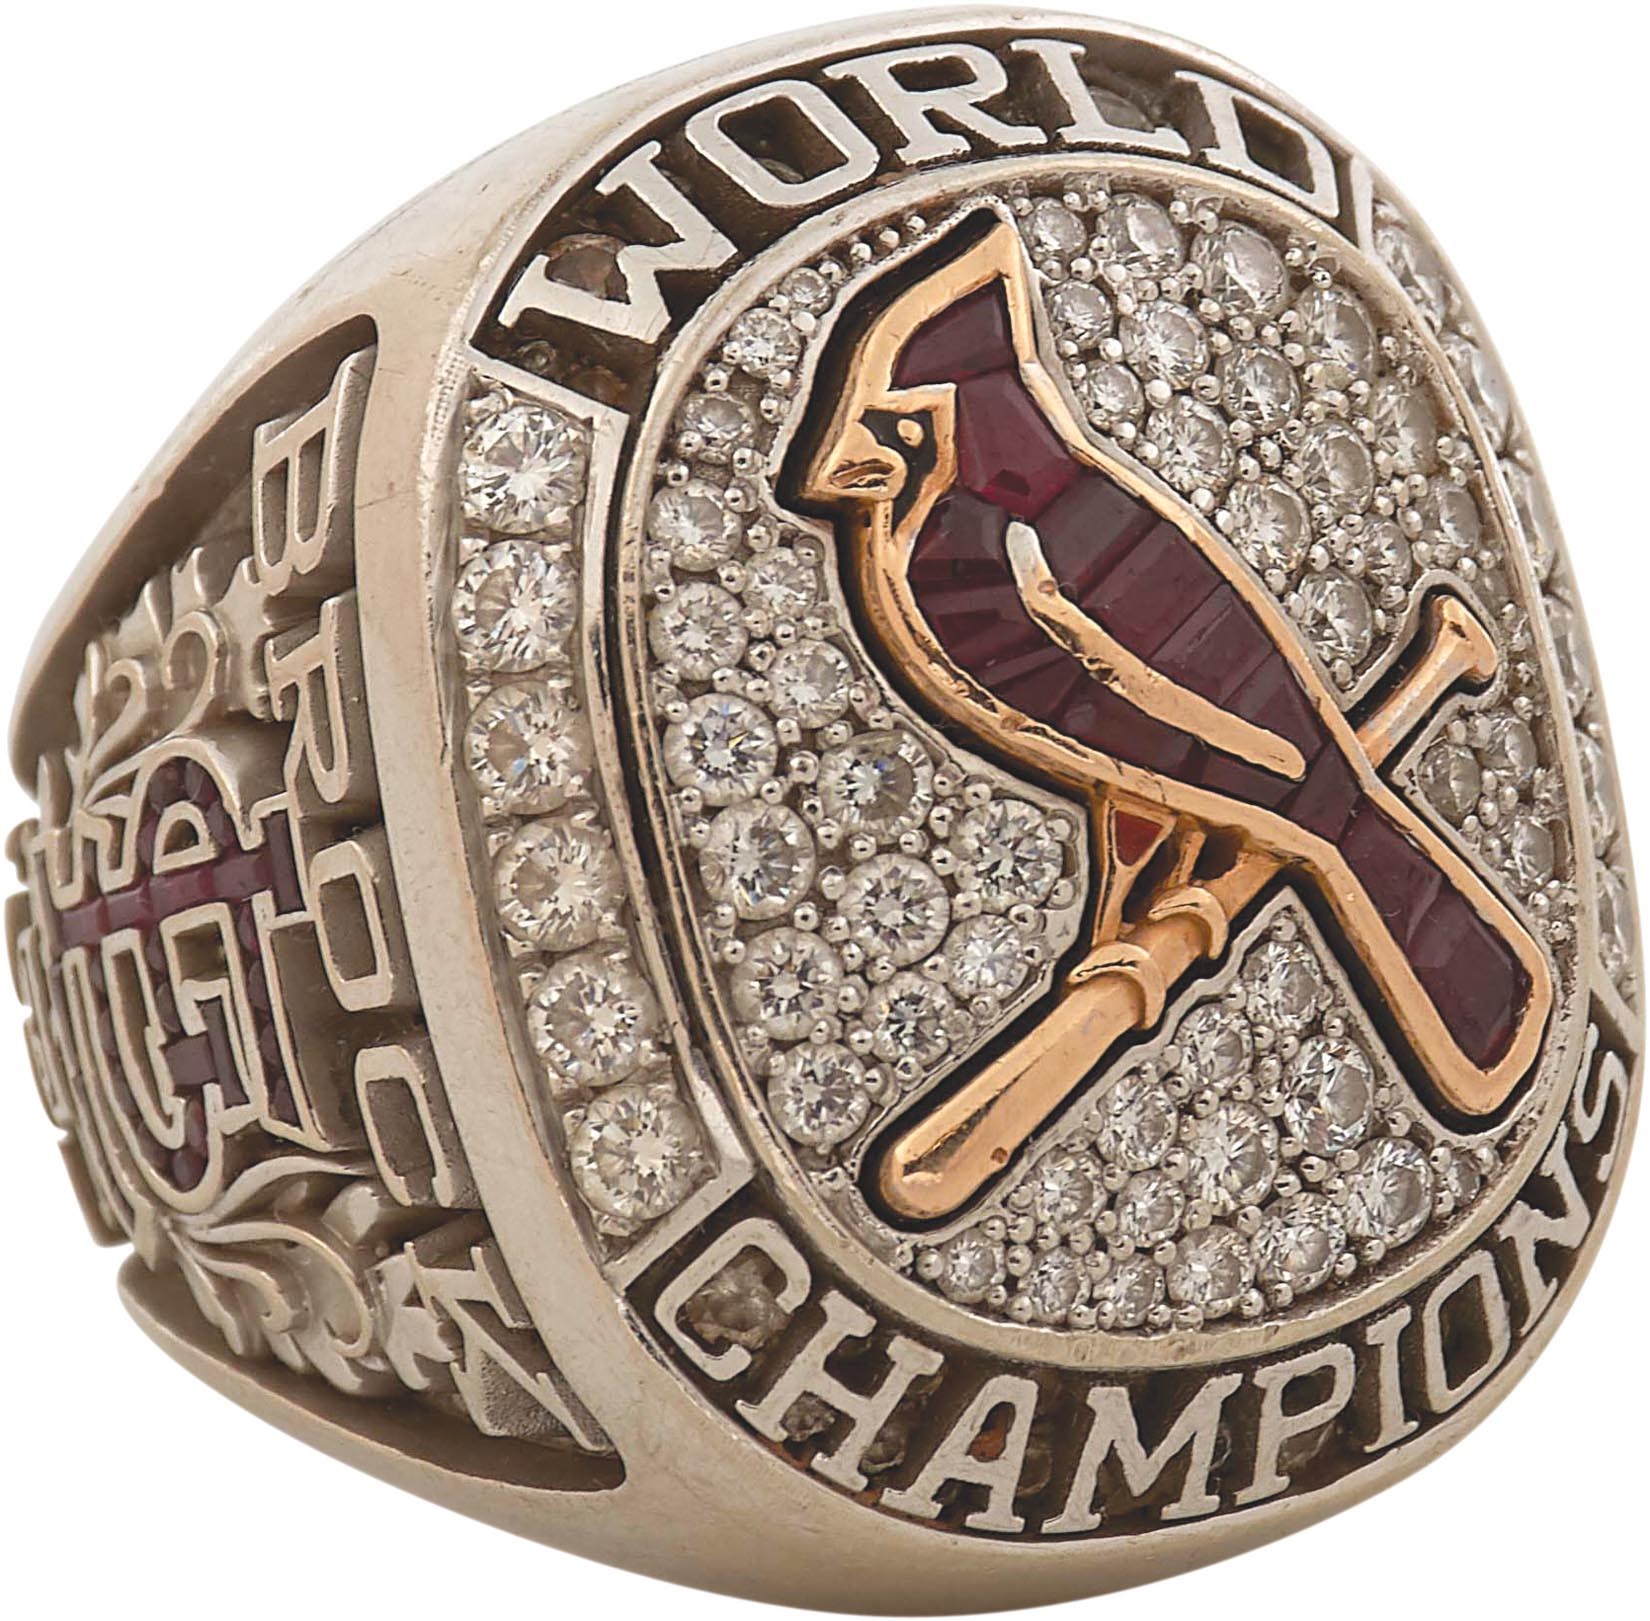 2011 St. Louis Cardinals MLB World Series Championship Ring